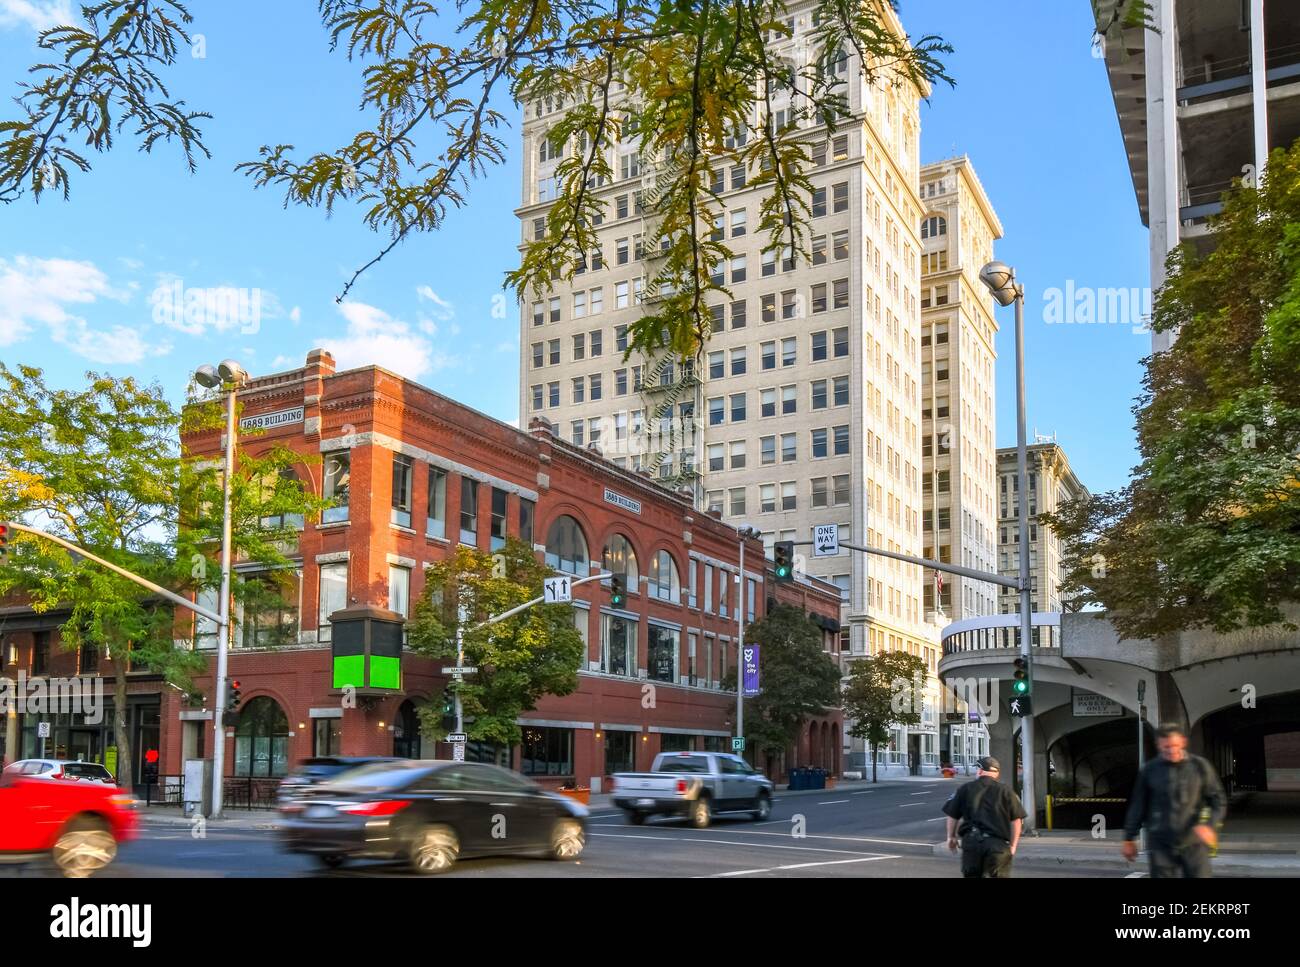 Downtown Main Street in the city center of Spokane, Washington, USA, near the 1889 Red brick building. Stock Photo